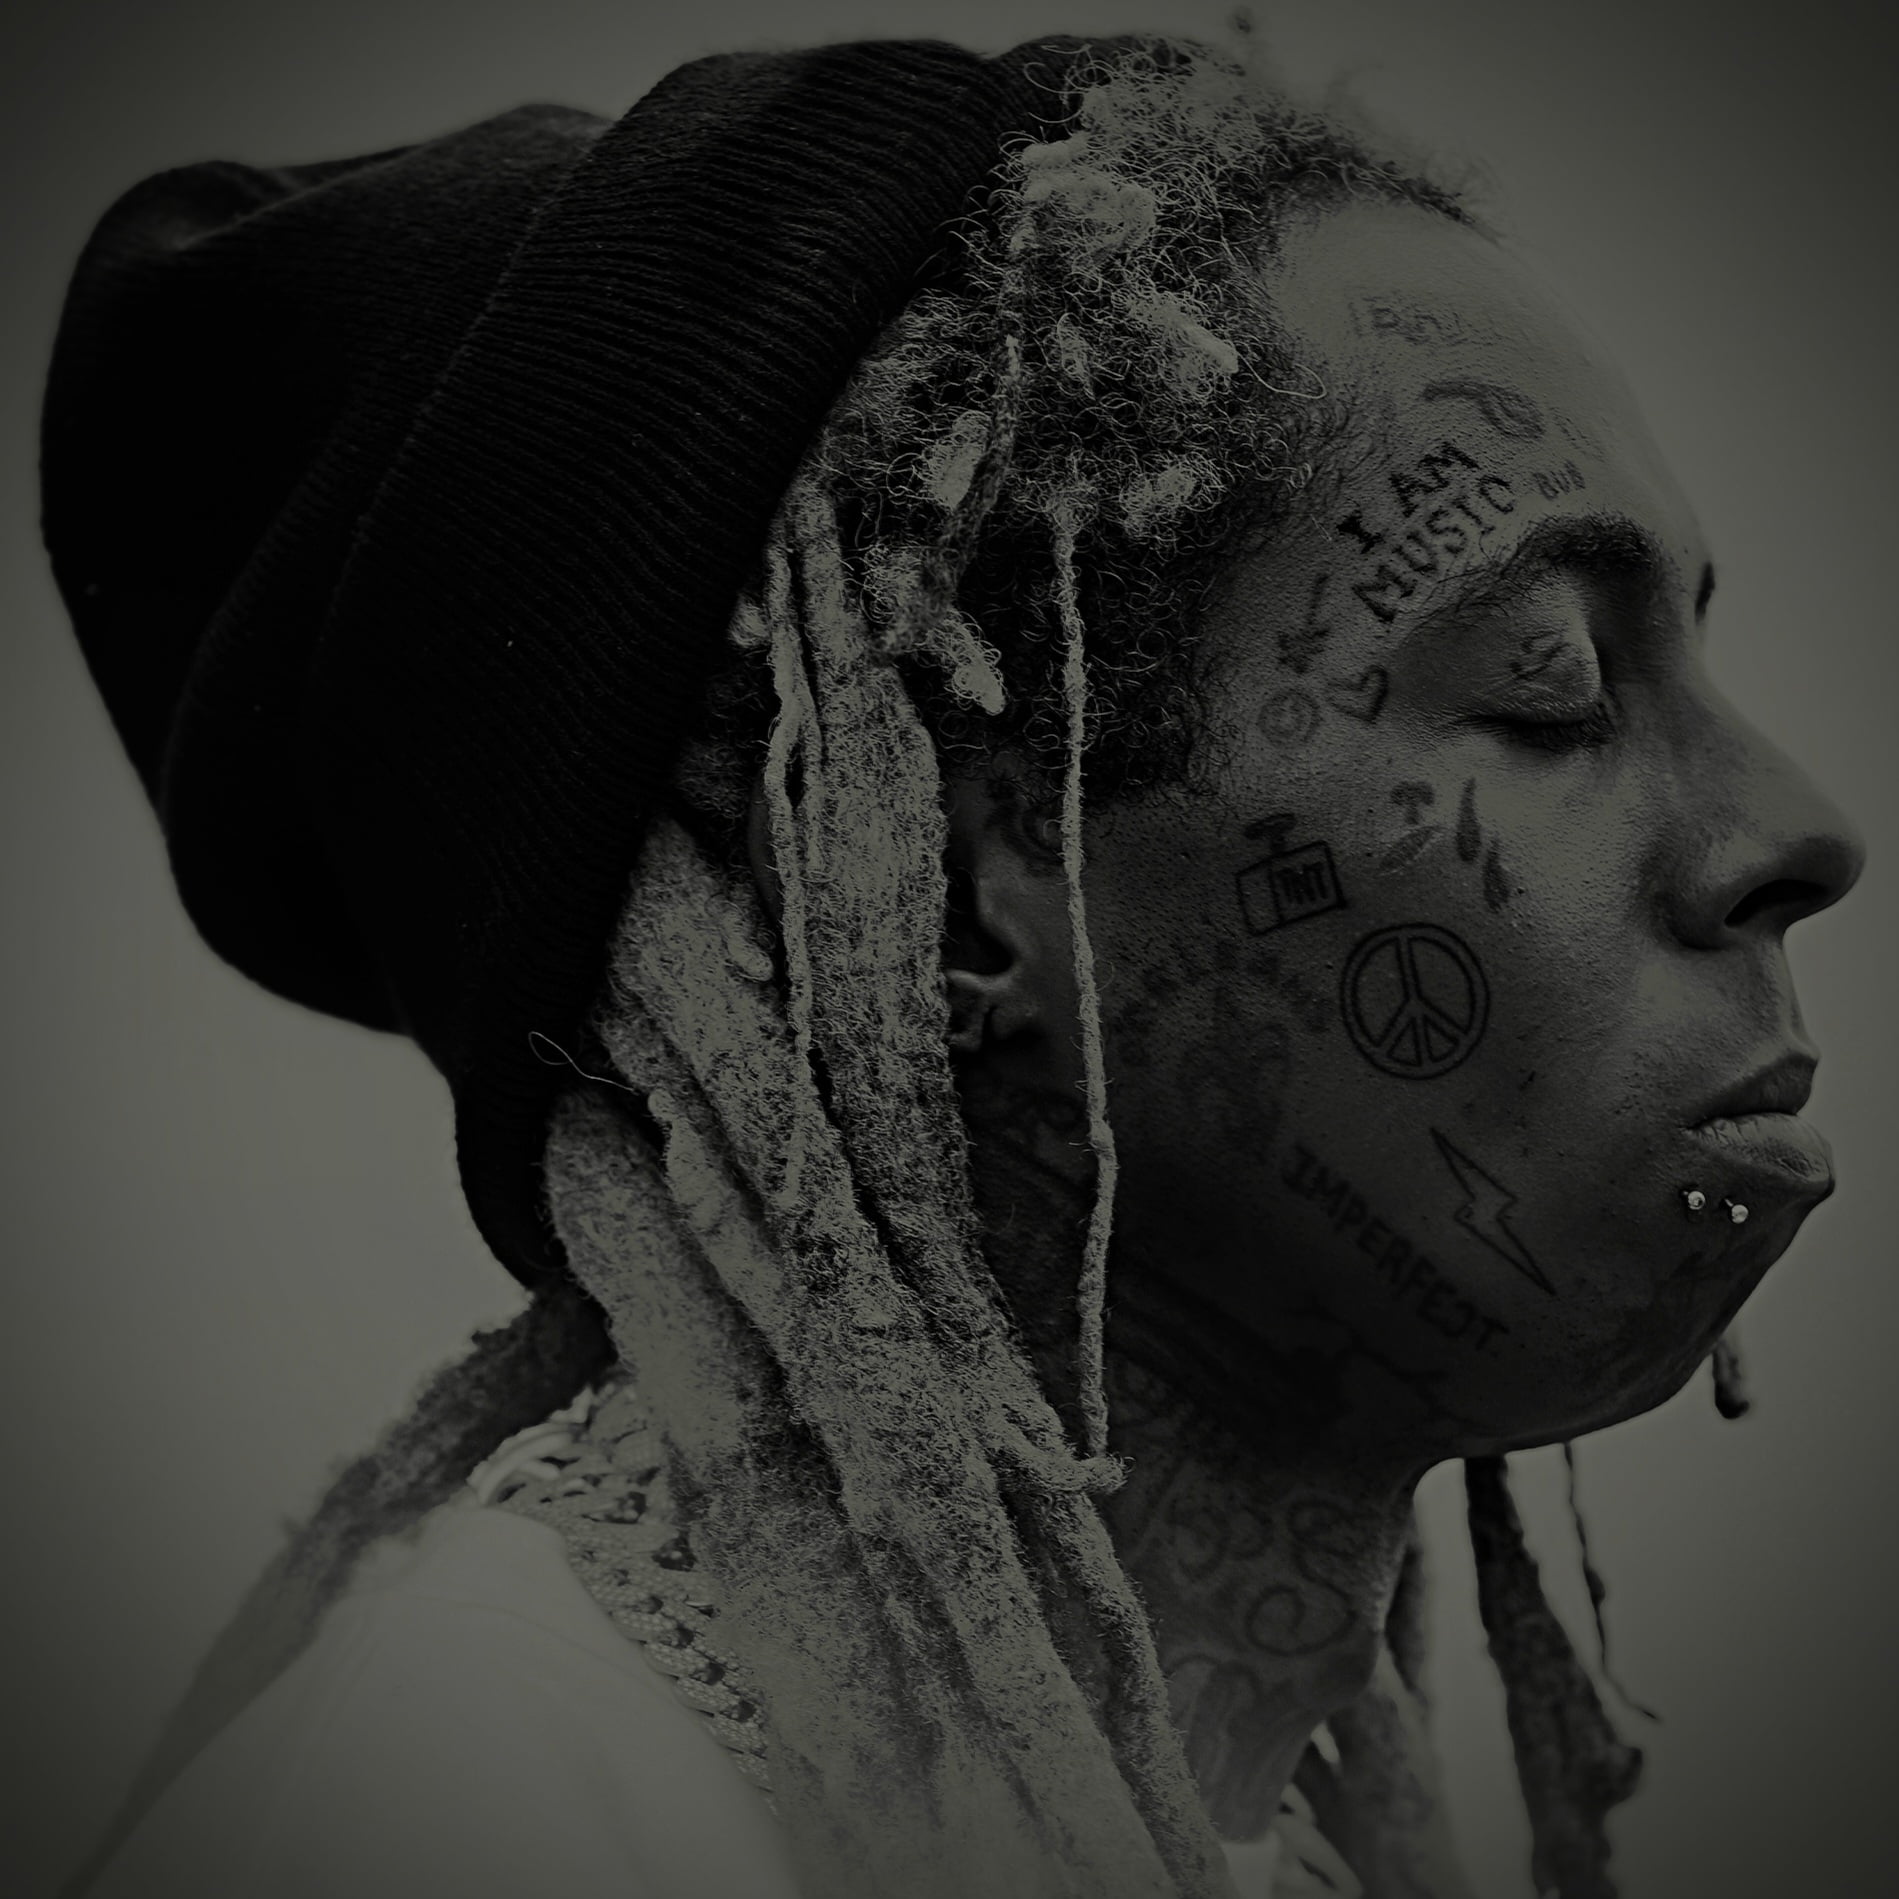 Lil Wayne compilation album was released via 360 MAGAZINE.